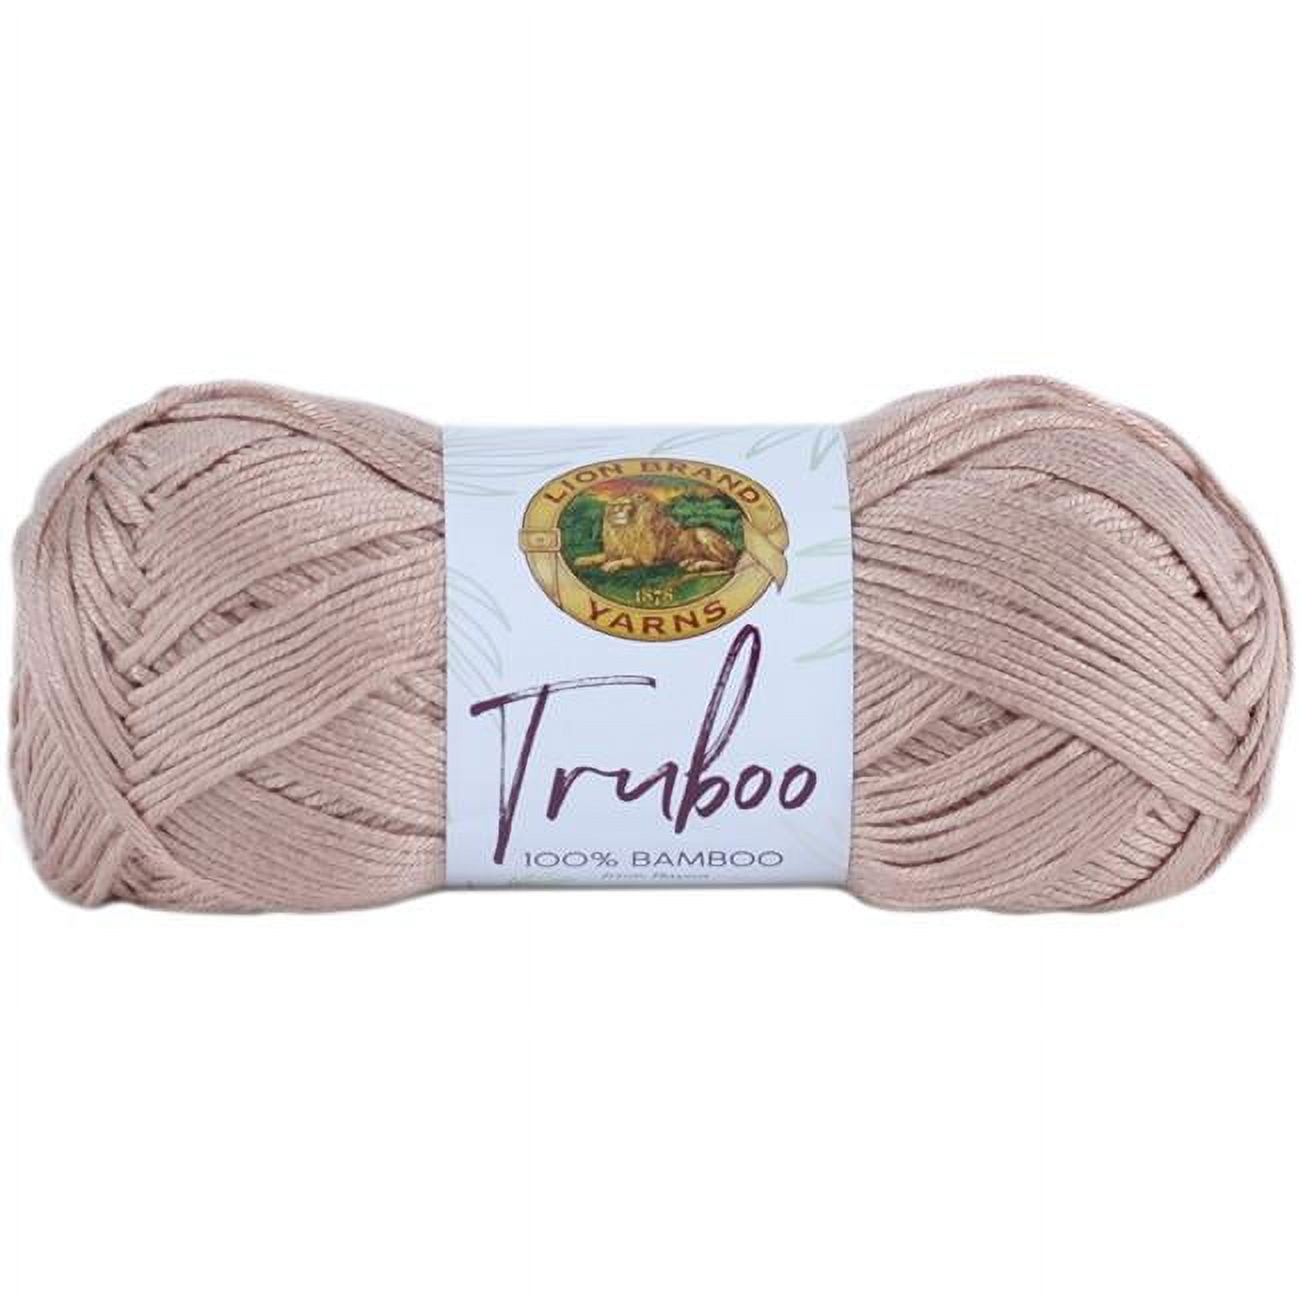 Lion Brand Truboo Yarn - Mushroom